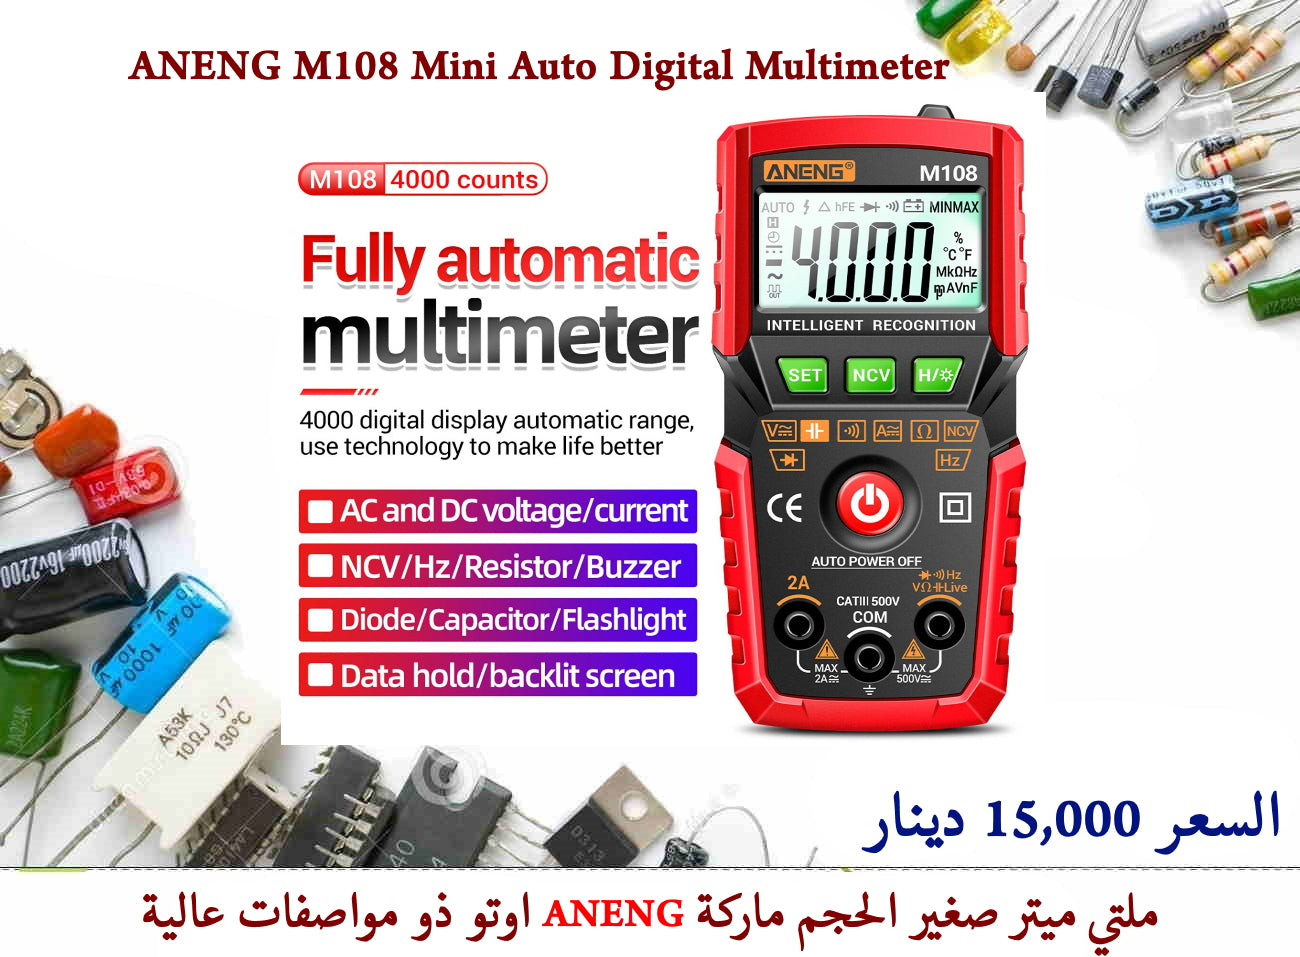 ANENG M108 Mini Auto Digital Multimeter